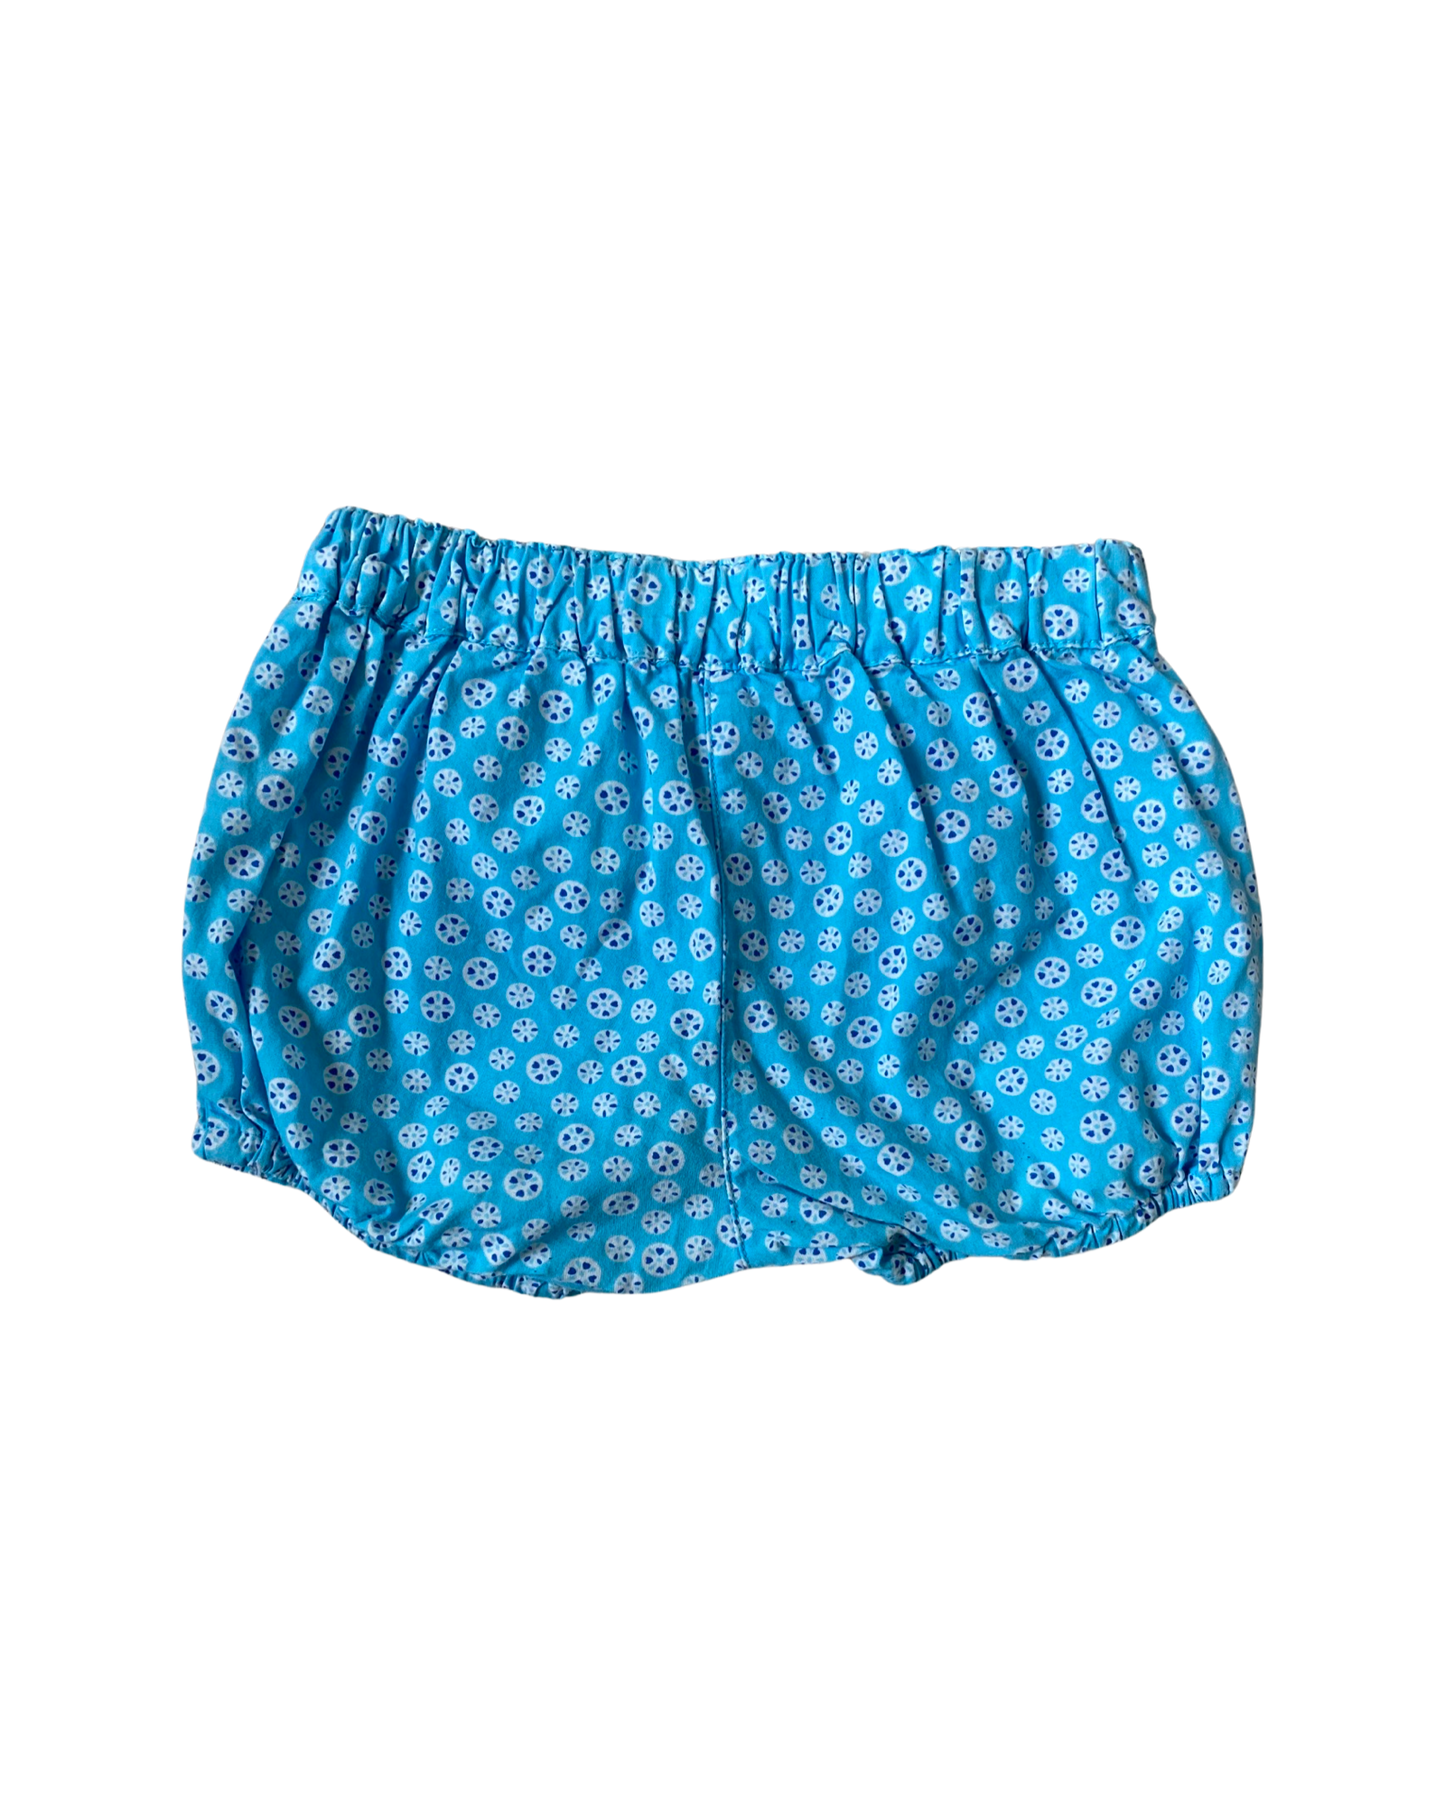 Benetton printed bubble shorts (size 6-9mths)